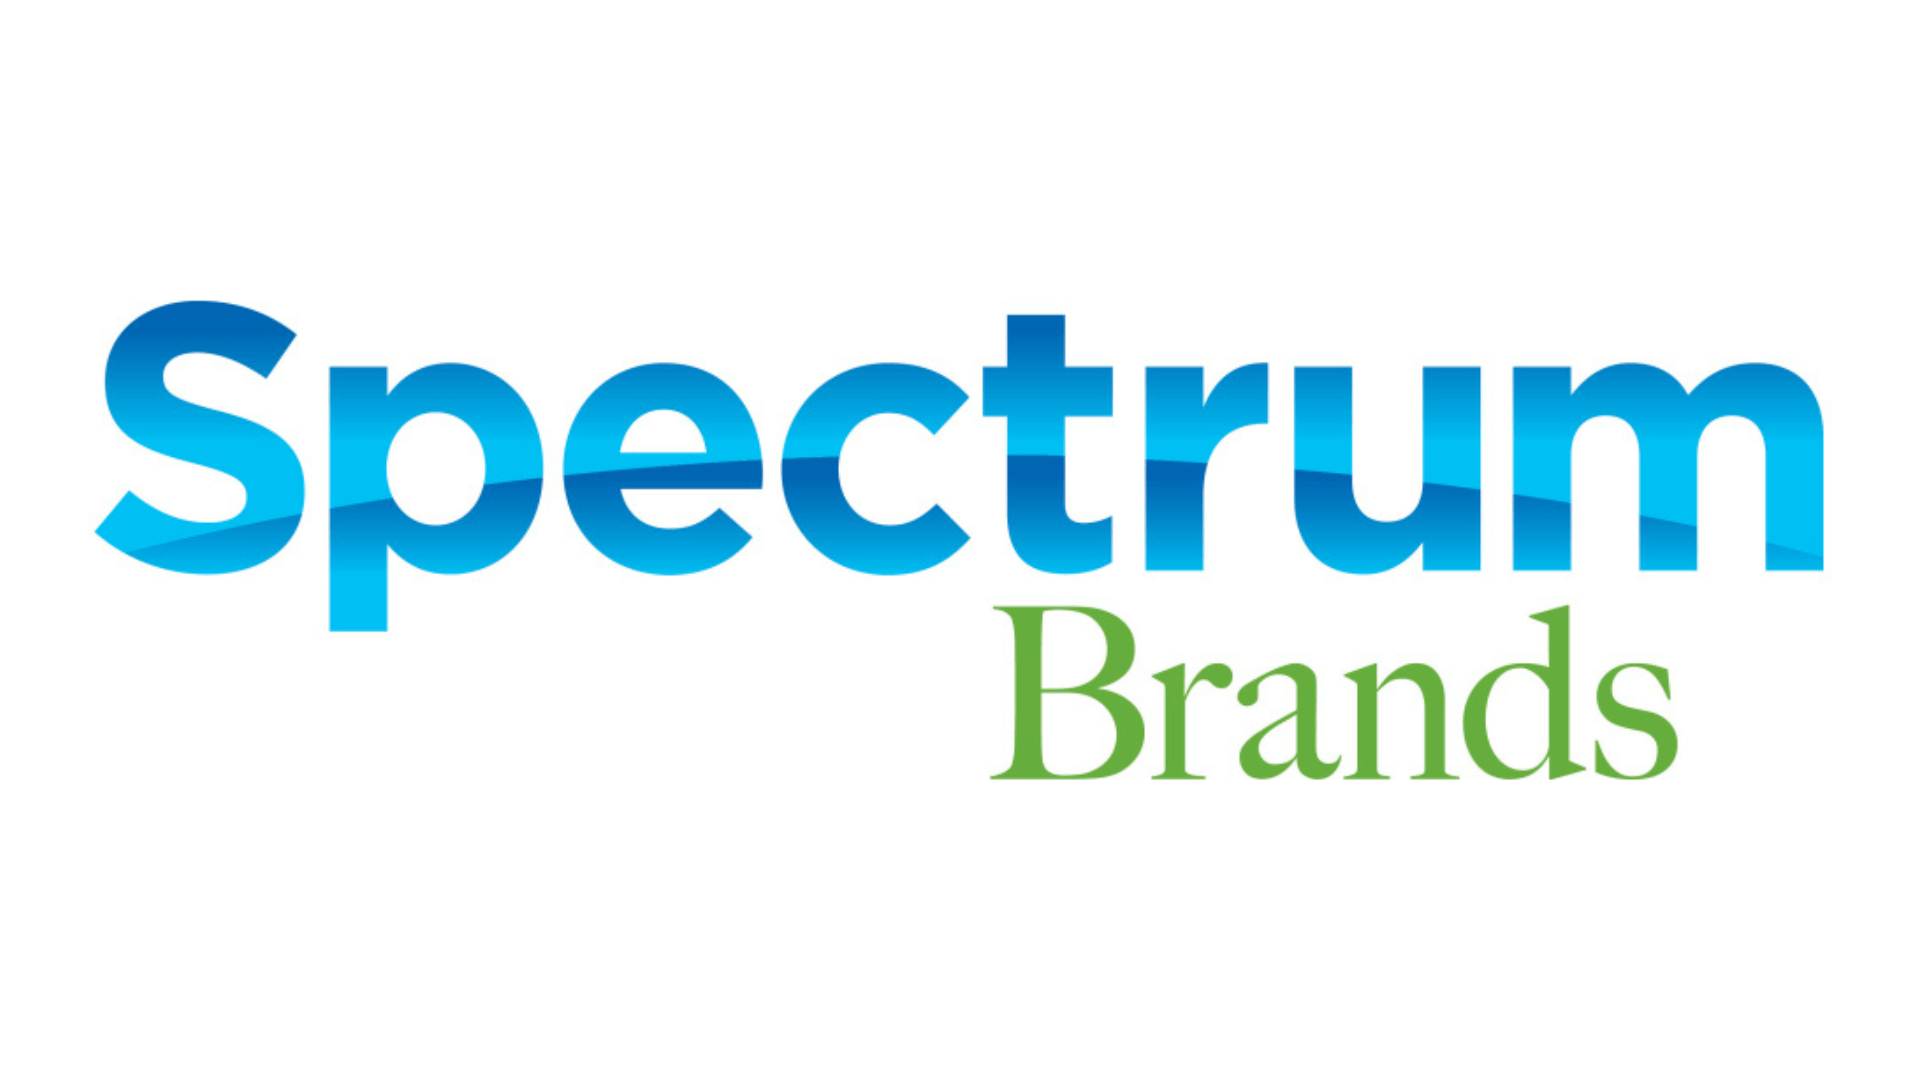 Spectrum Brands pet business remains flat in Q2 2022